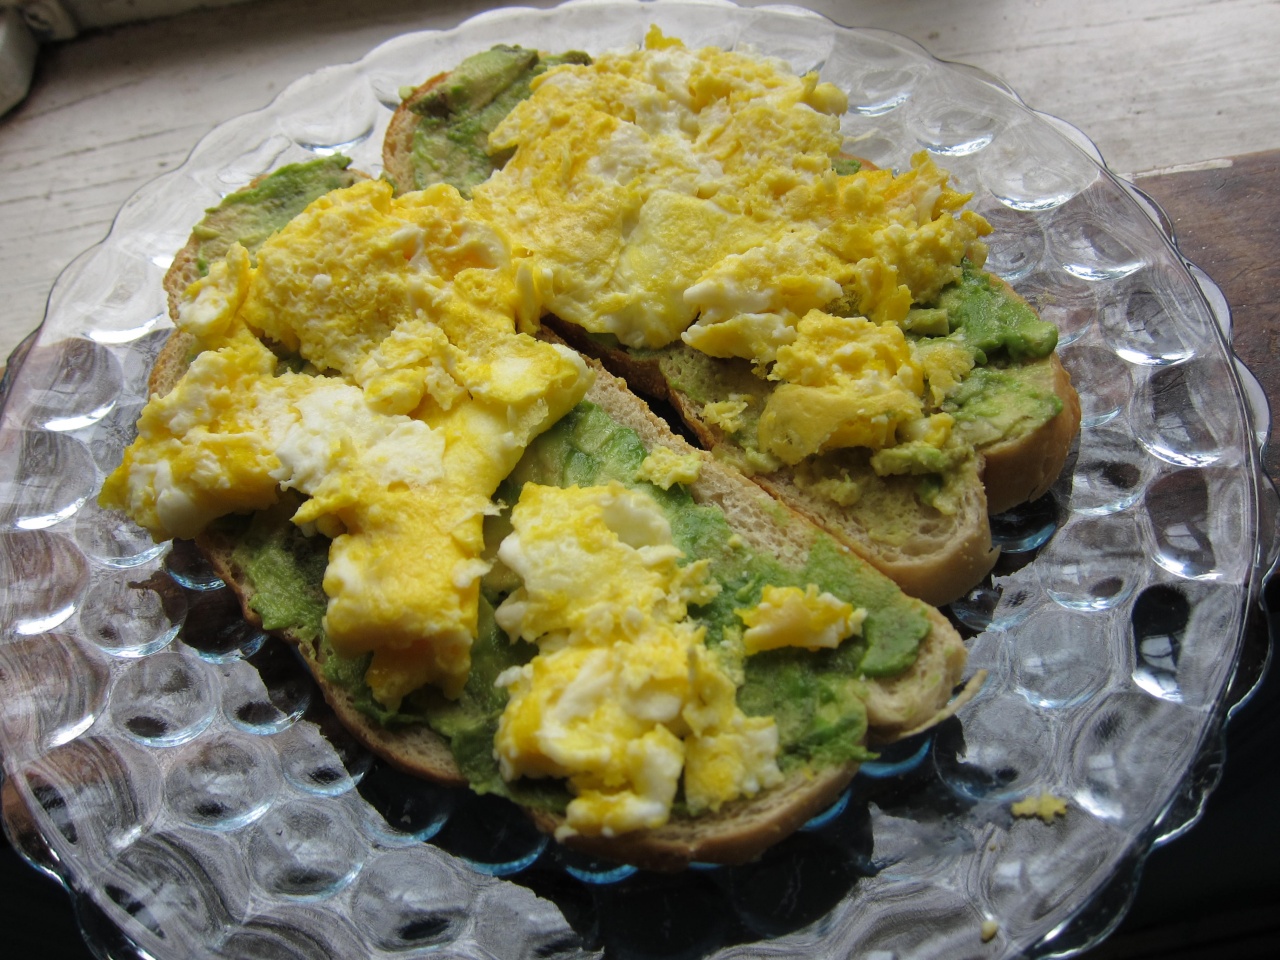 Fried egg and avocado on toast